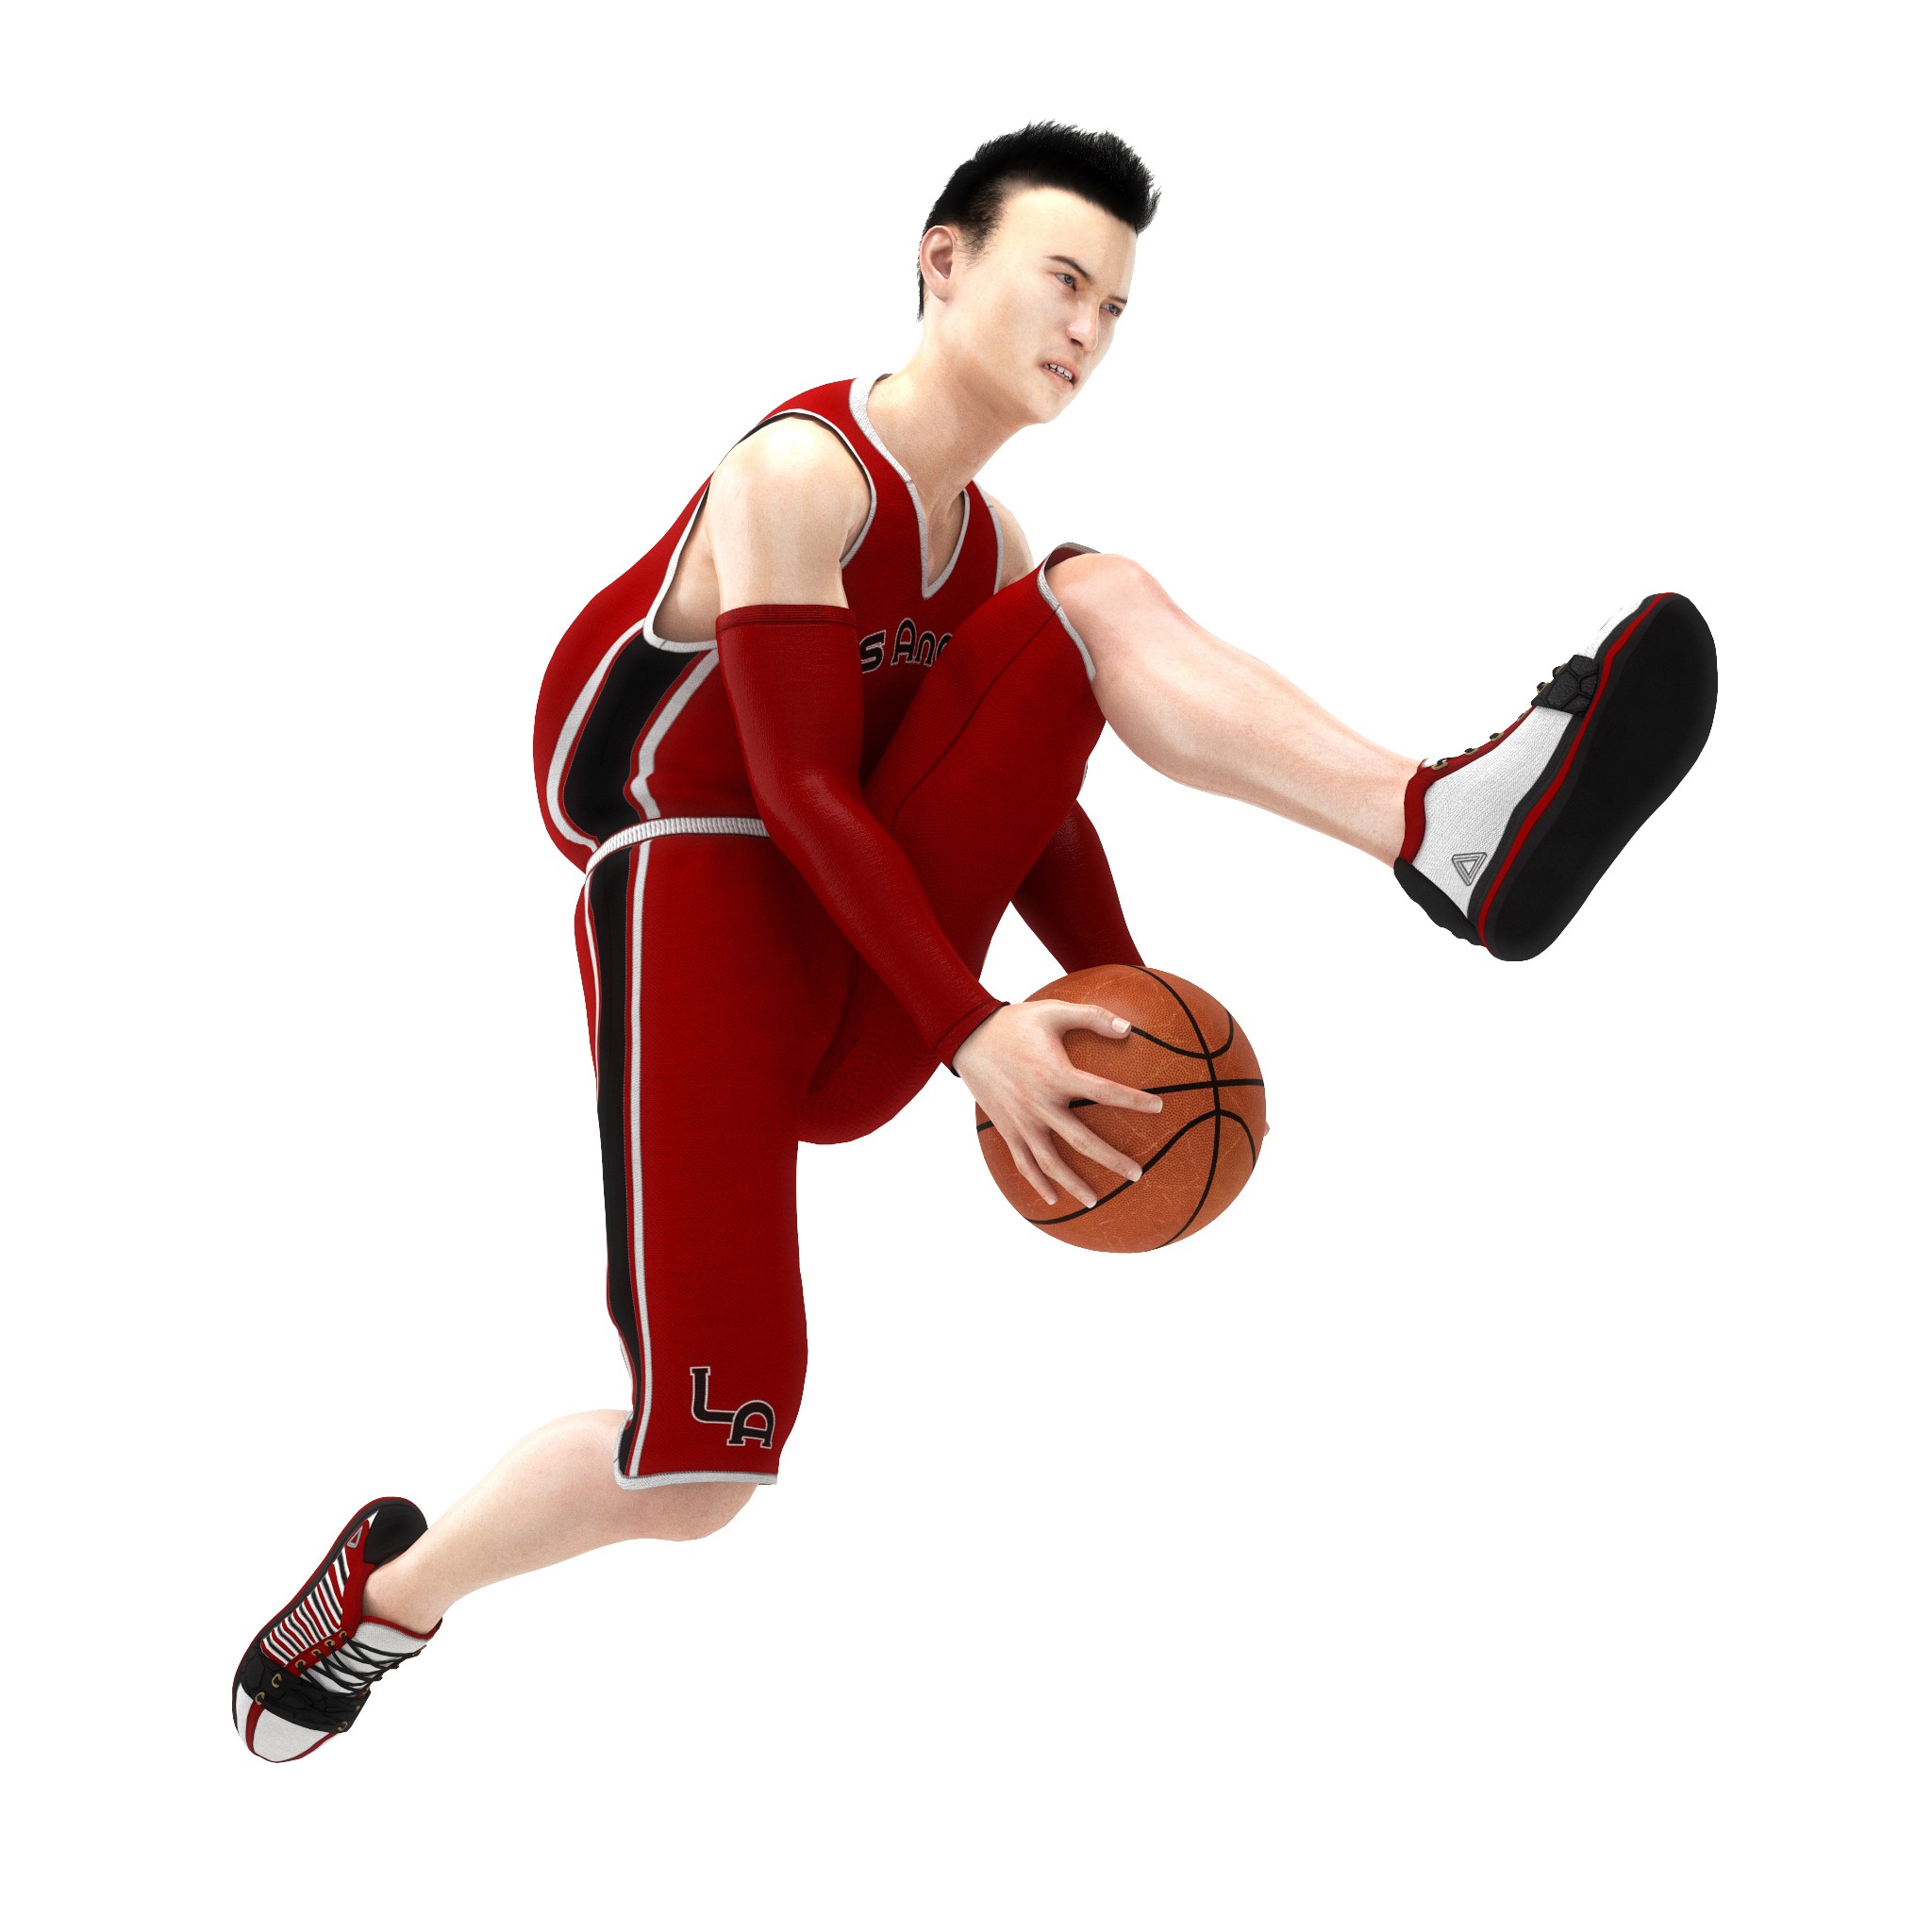 BasketballBoy_pose3.jpg